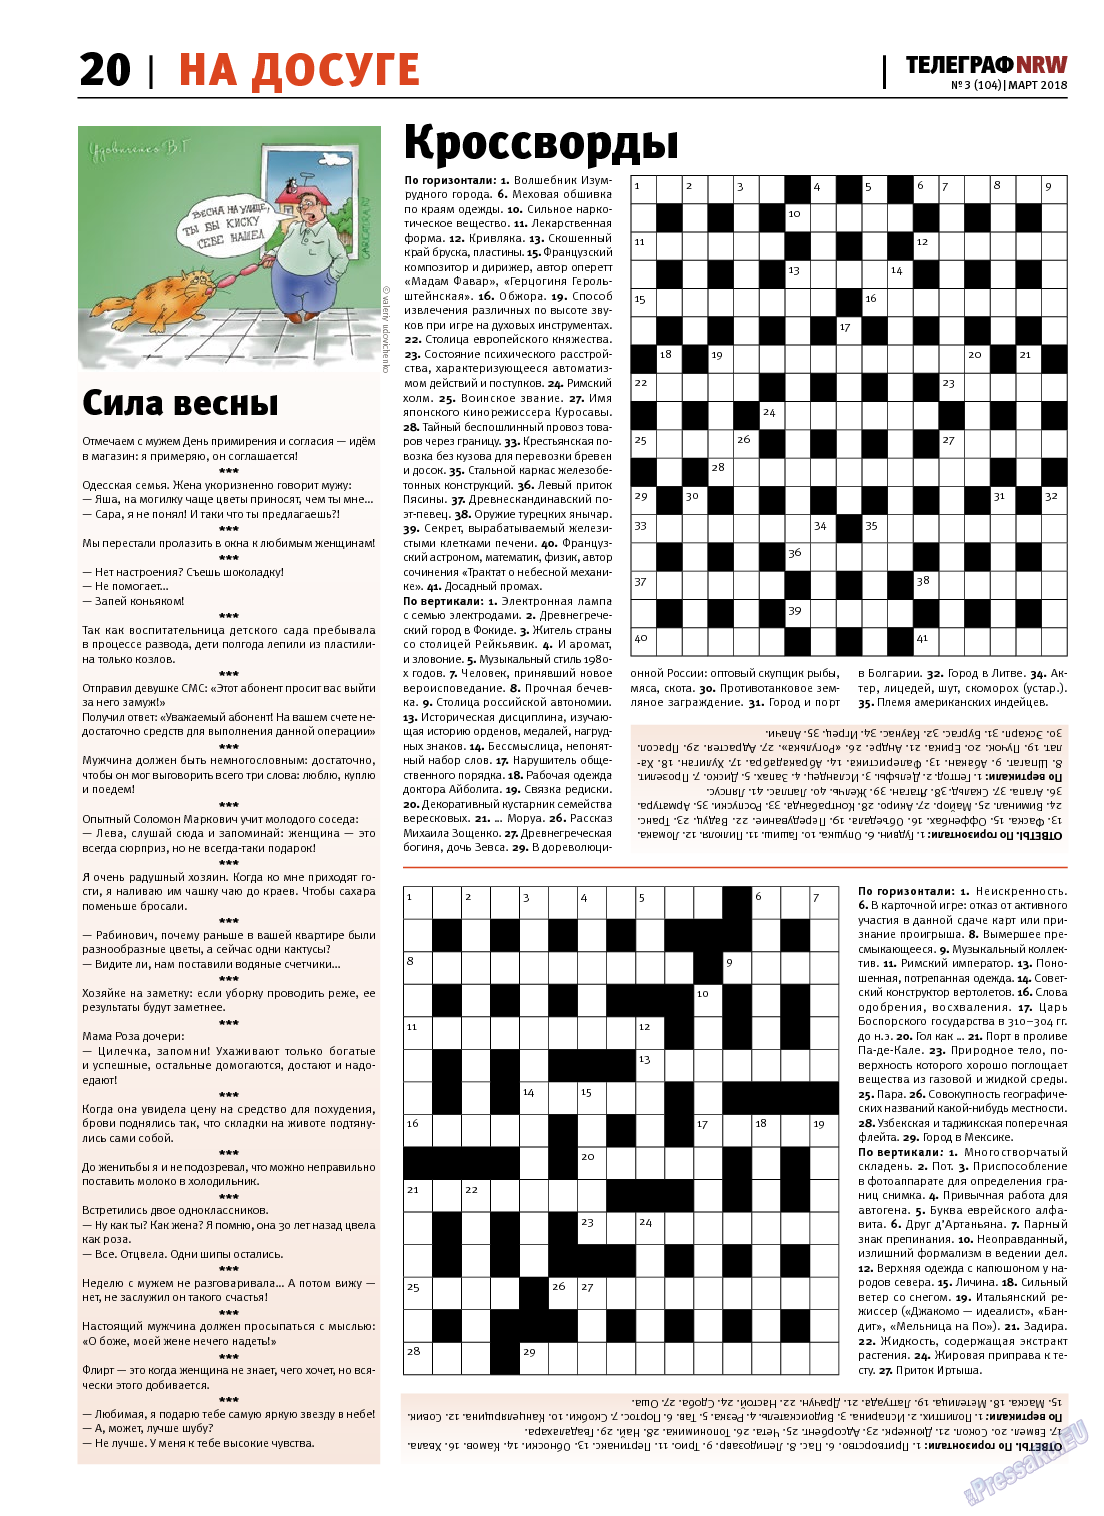 Телеграф NRW, газета. 2018 №3 стр.20